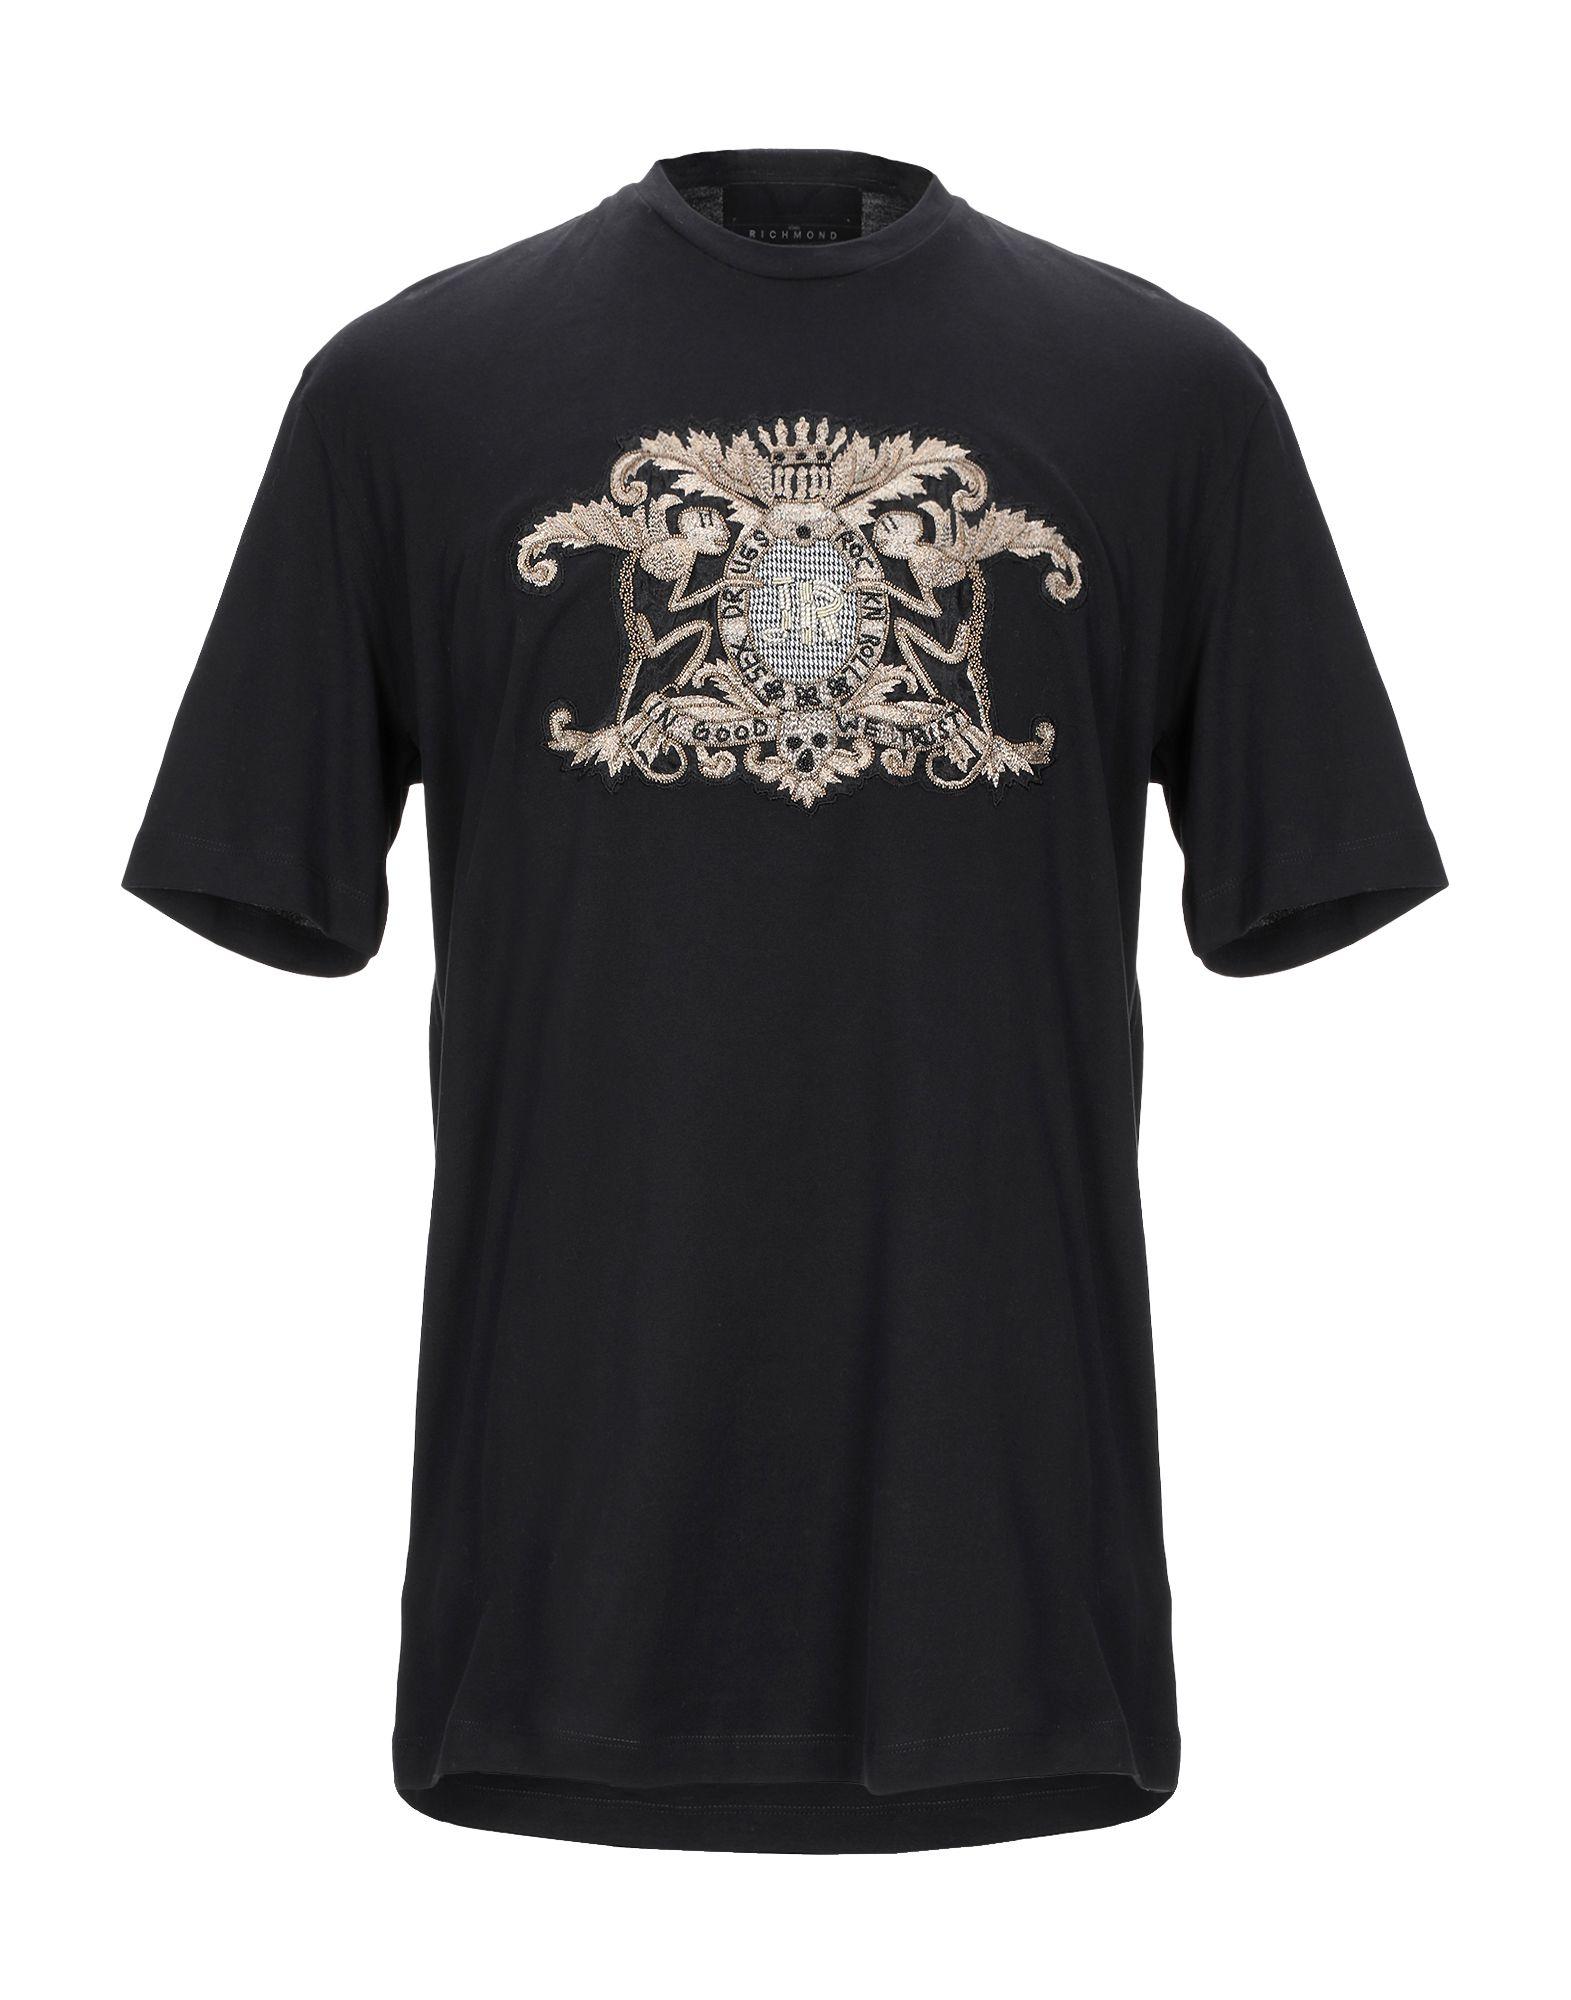 John Richmond T-shirt in Black for Men - Lyst